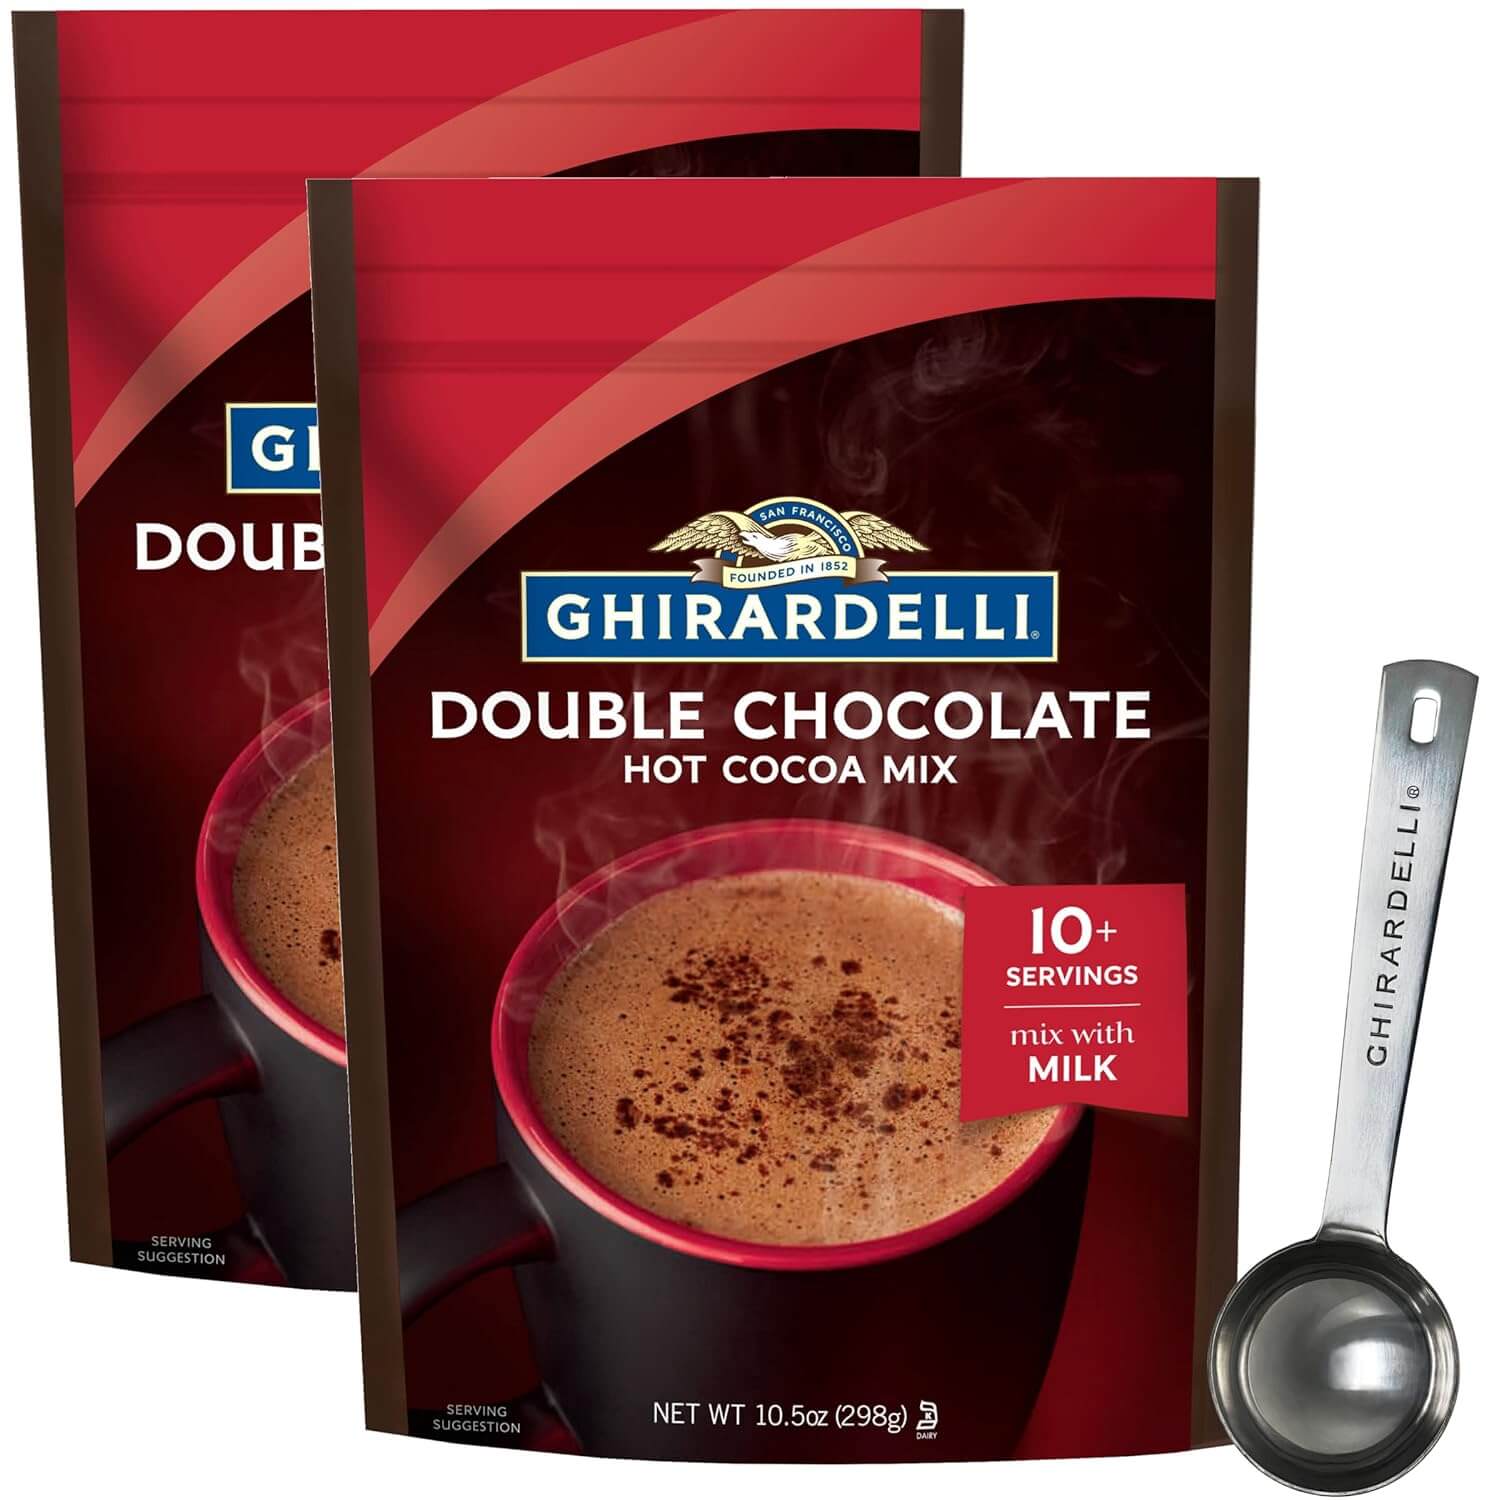 Ghirardelli Double Chocolate Hot Cocoa Mix